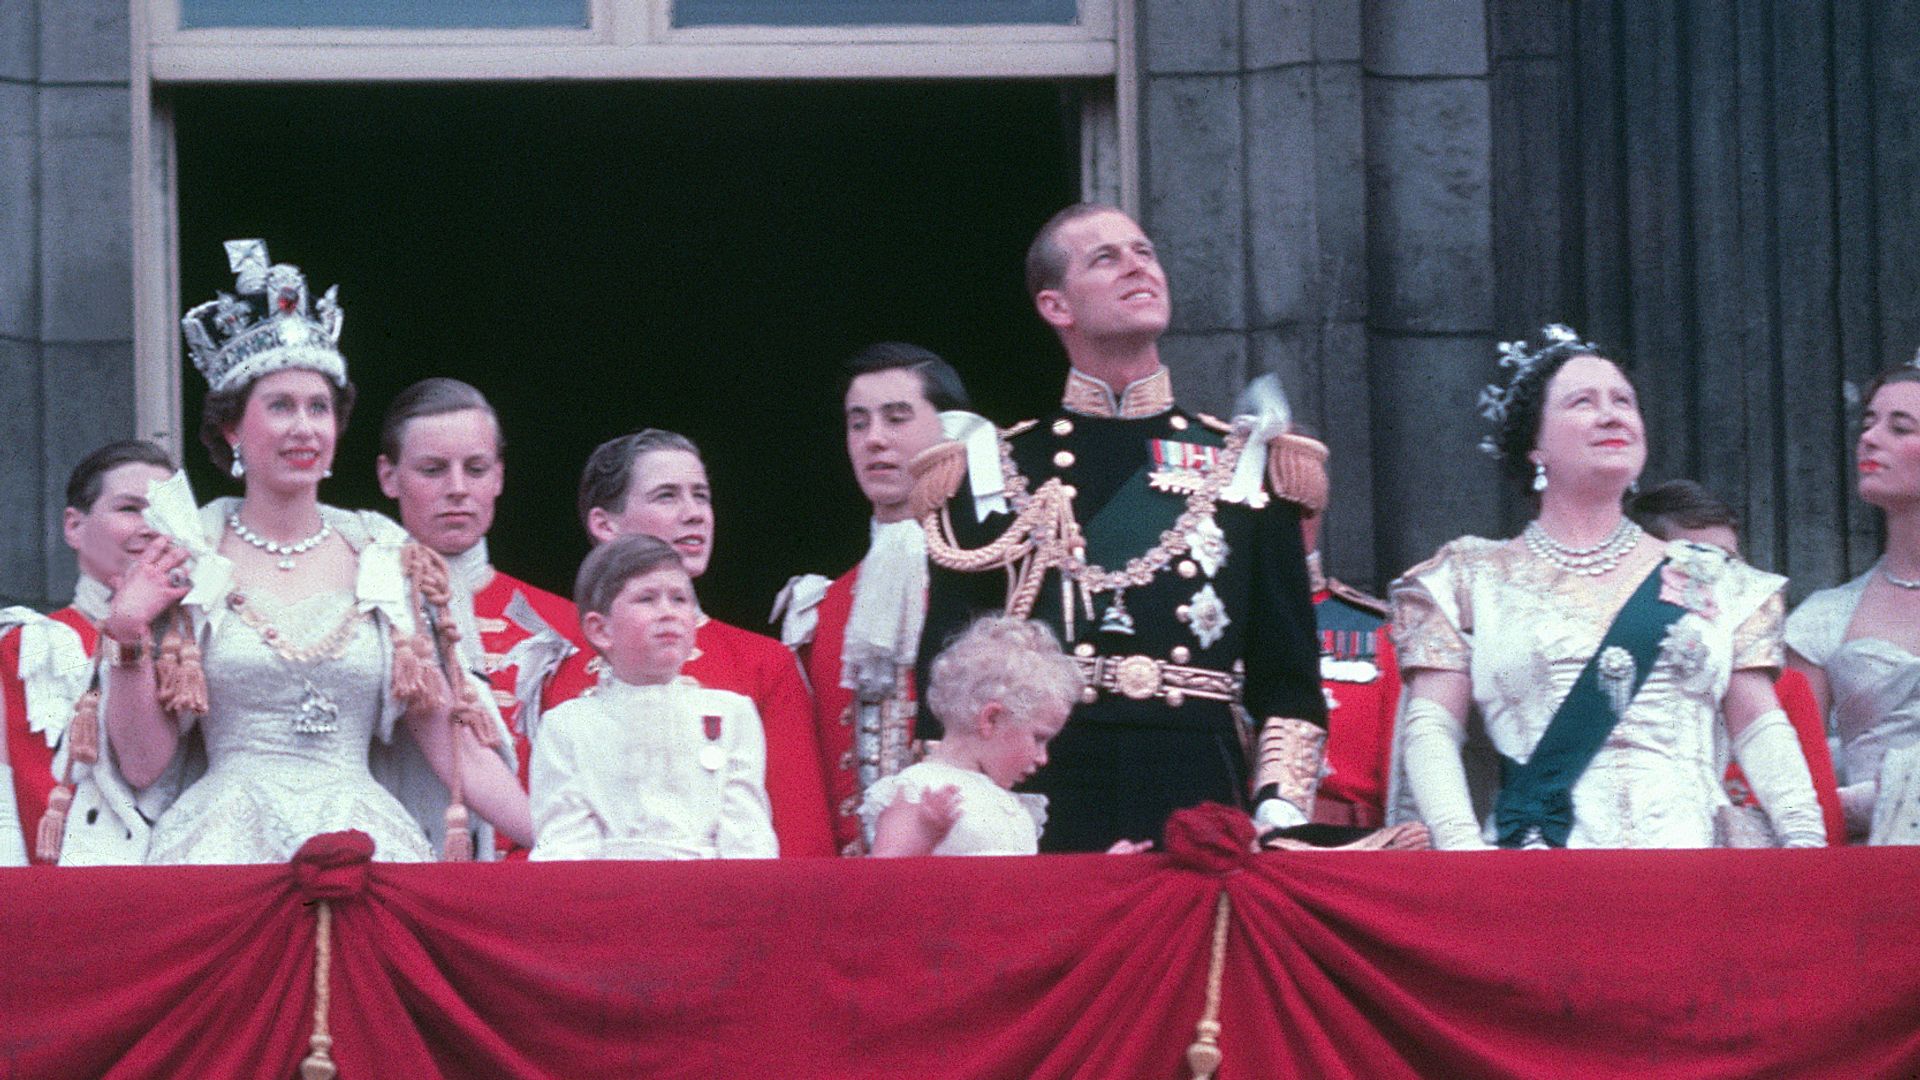 The Queen's 1953 coronation